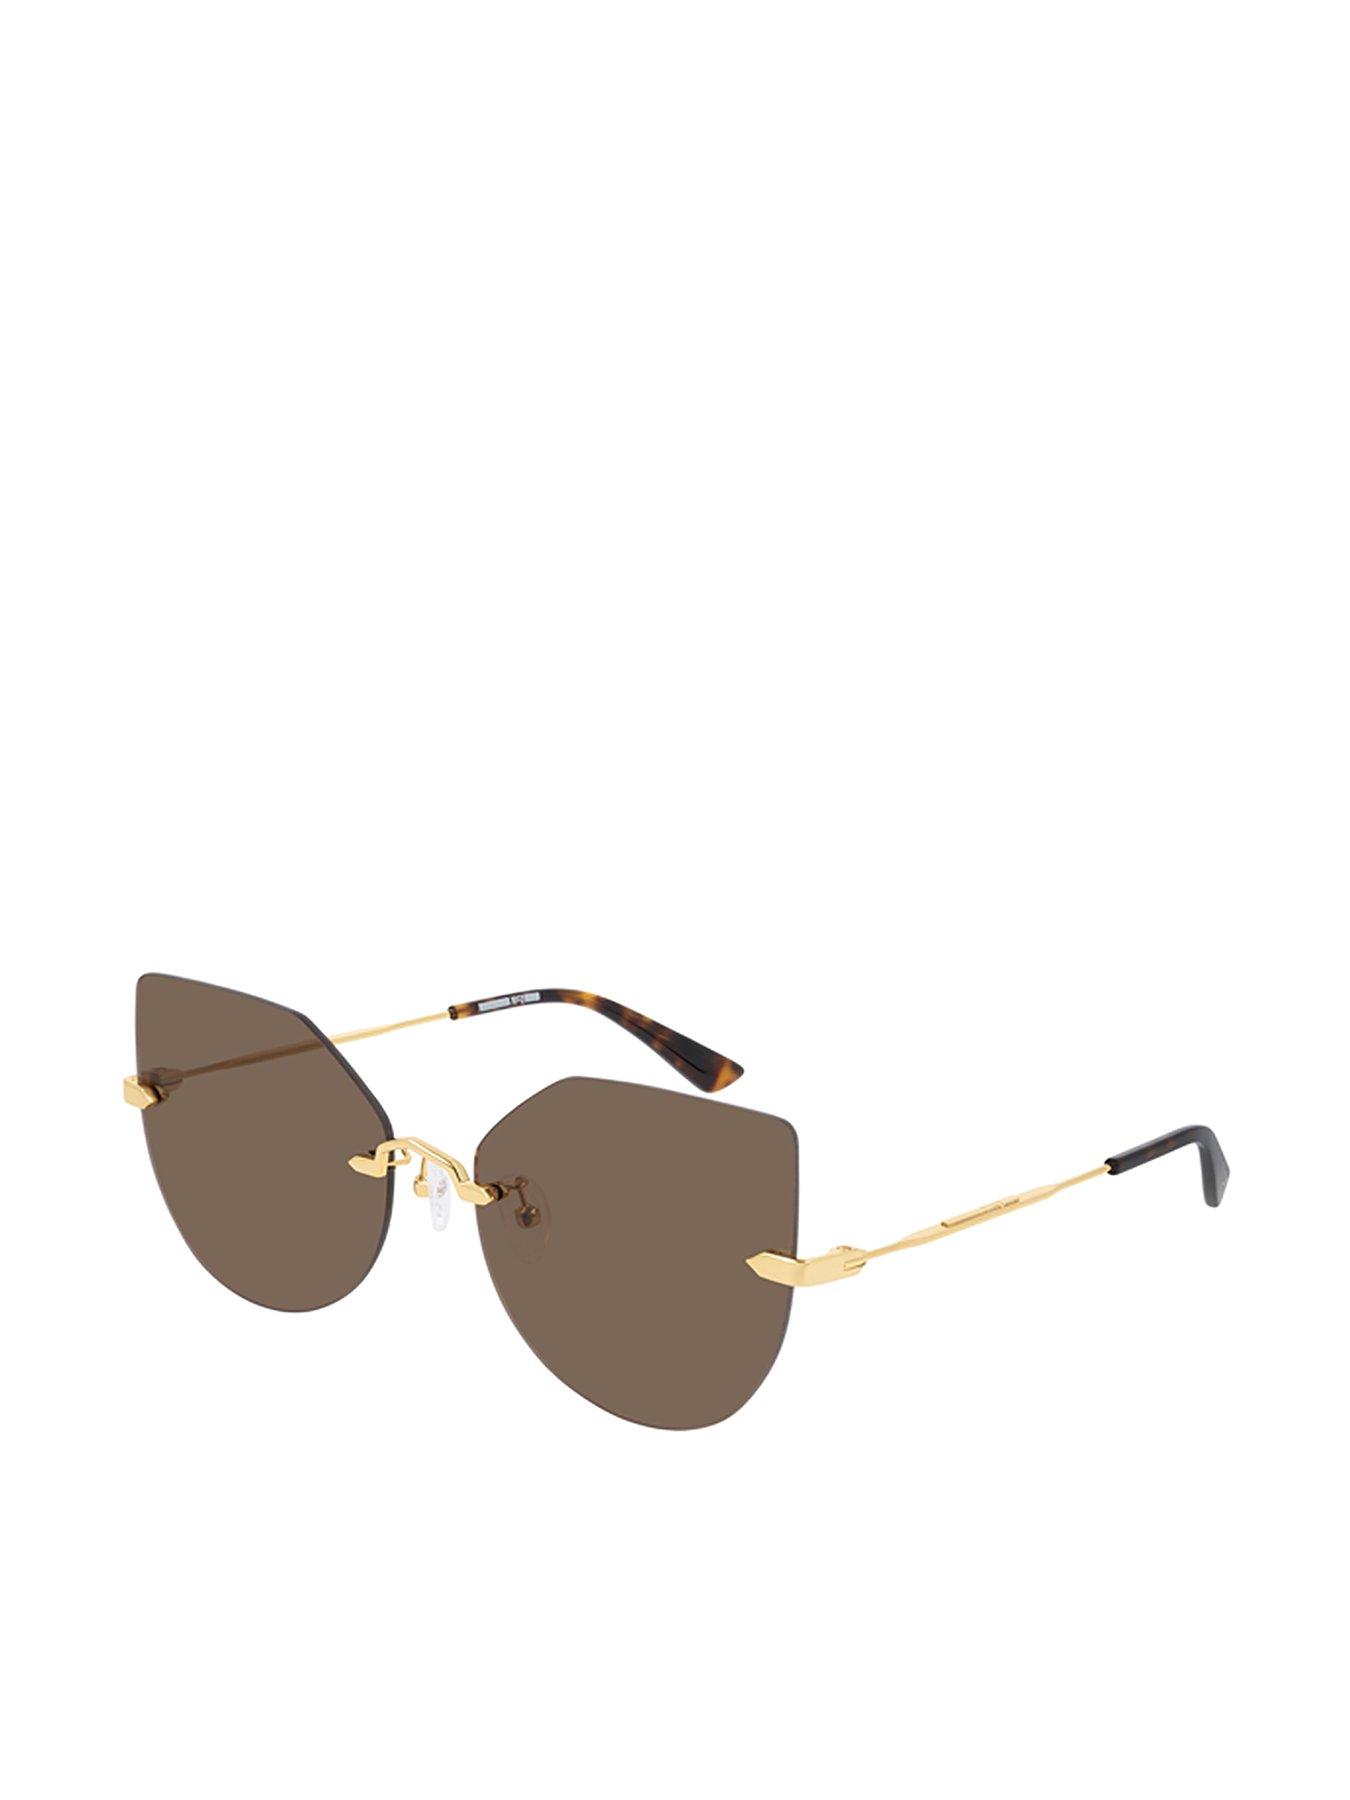  Cateye Sunglasses - Gold/Brown